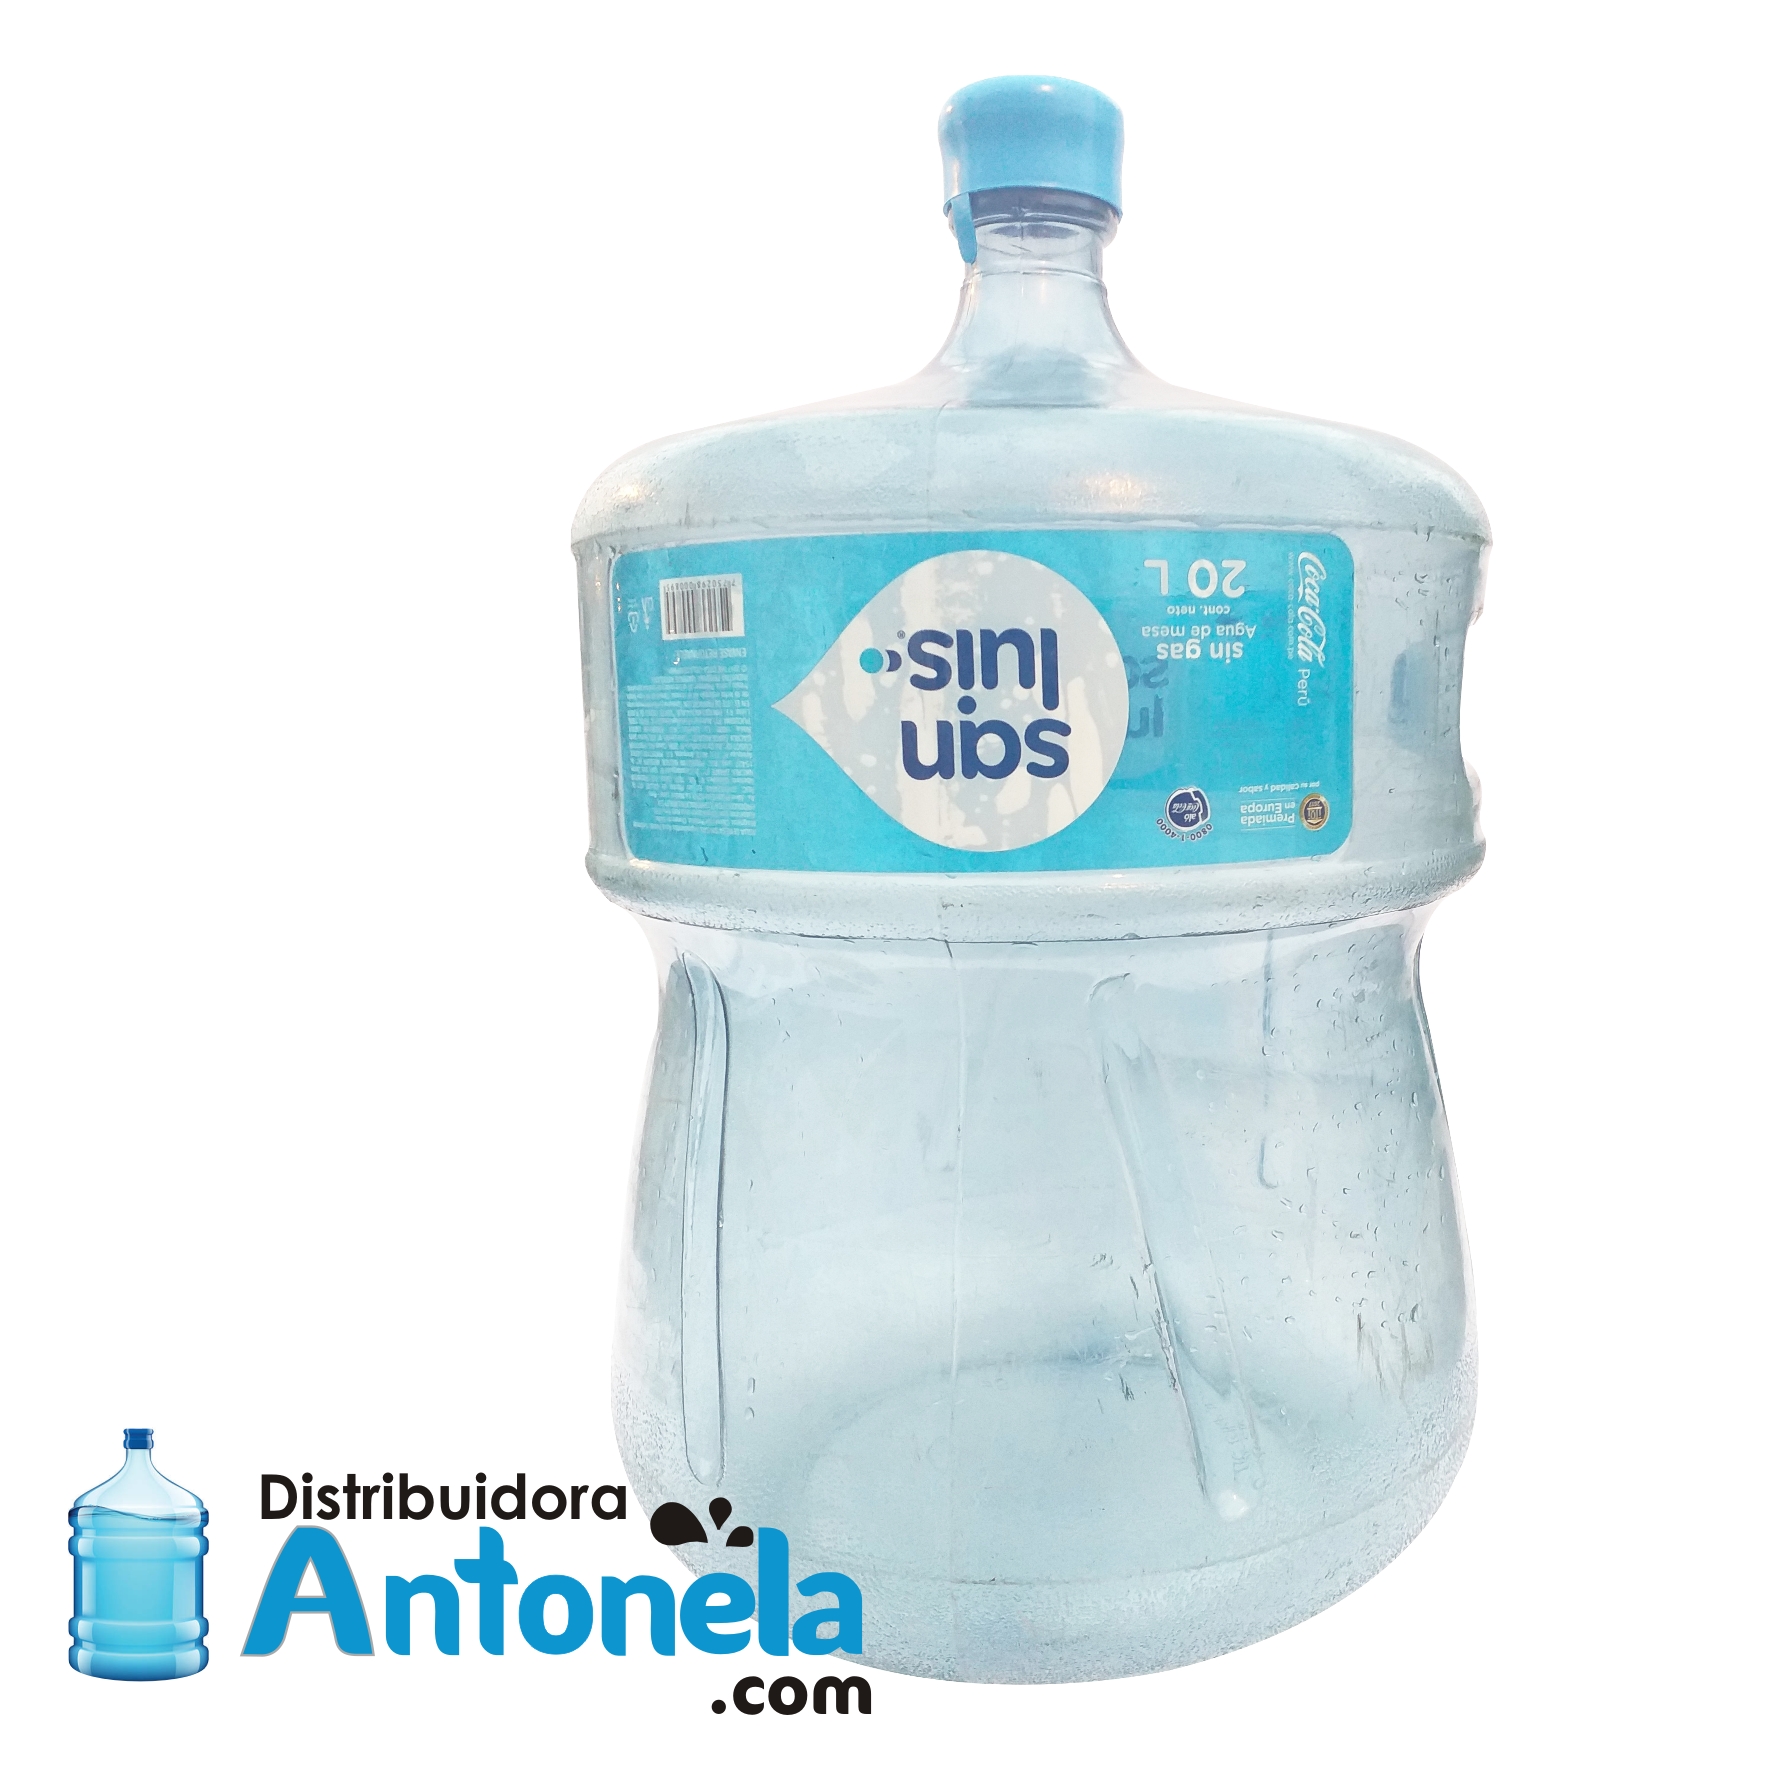 Bidon de agua de Mesa San luis de 20 litros - Bidones de agua ,  DISTRIBUIDORA ANTONELA